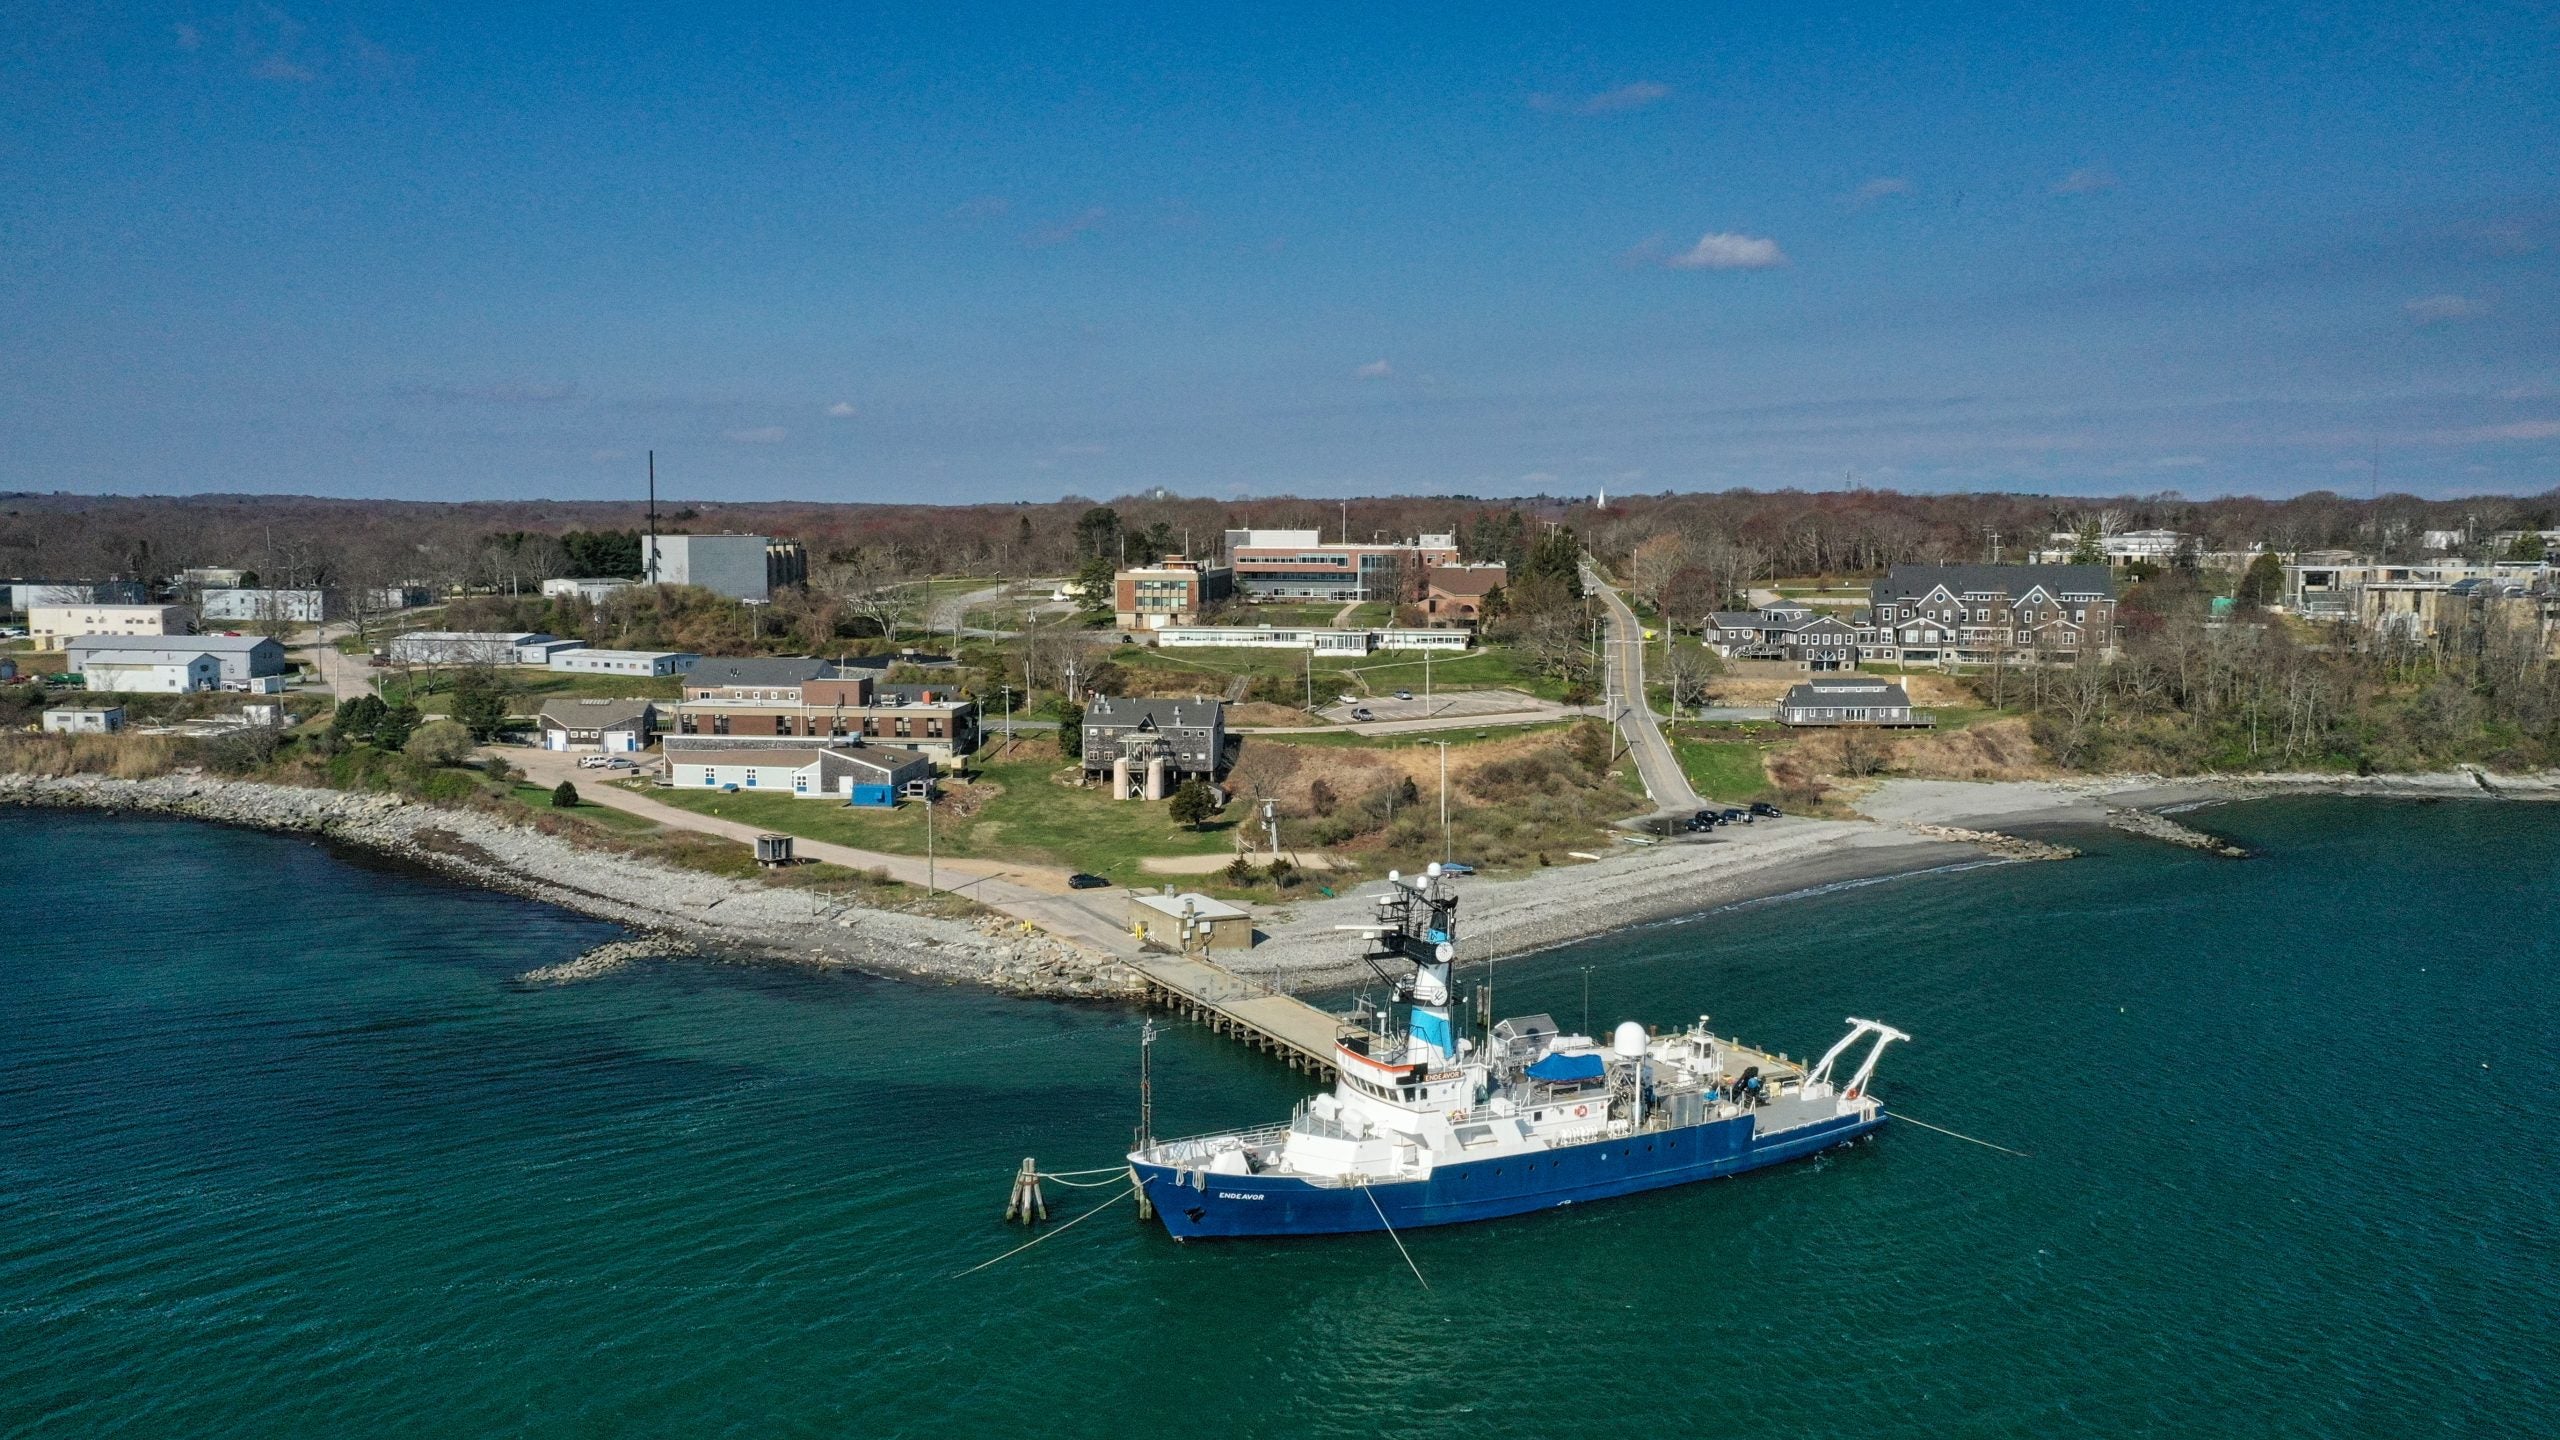 Aerial view of the URI Narragansett Bay Campus